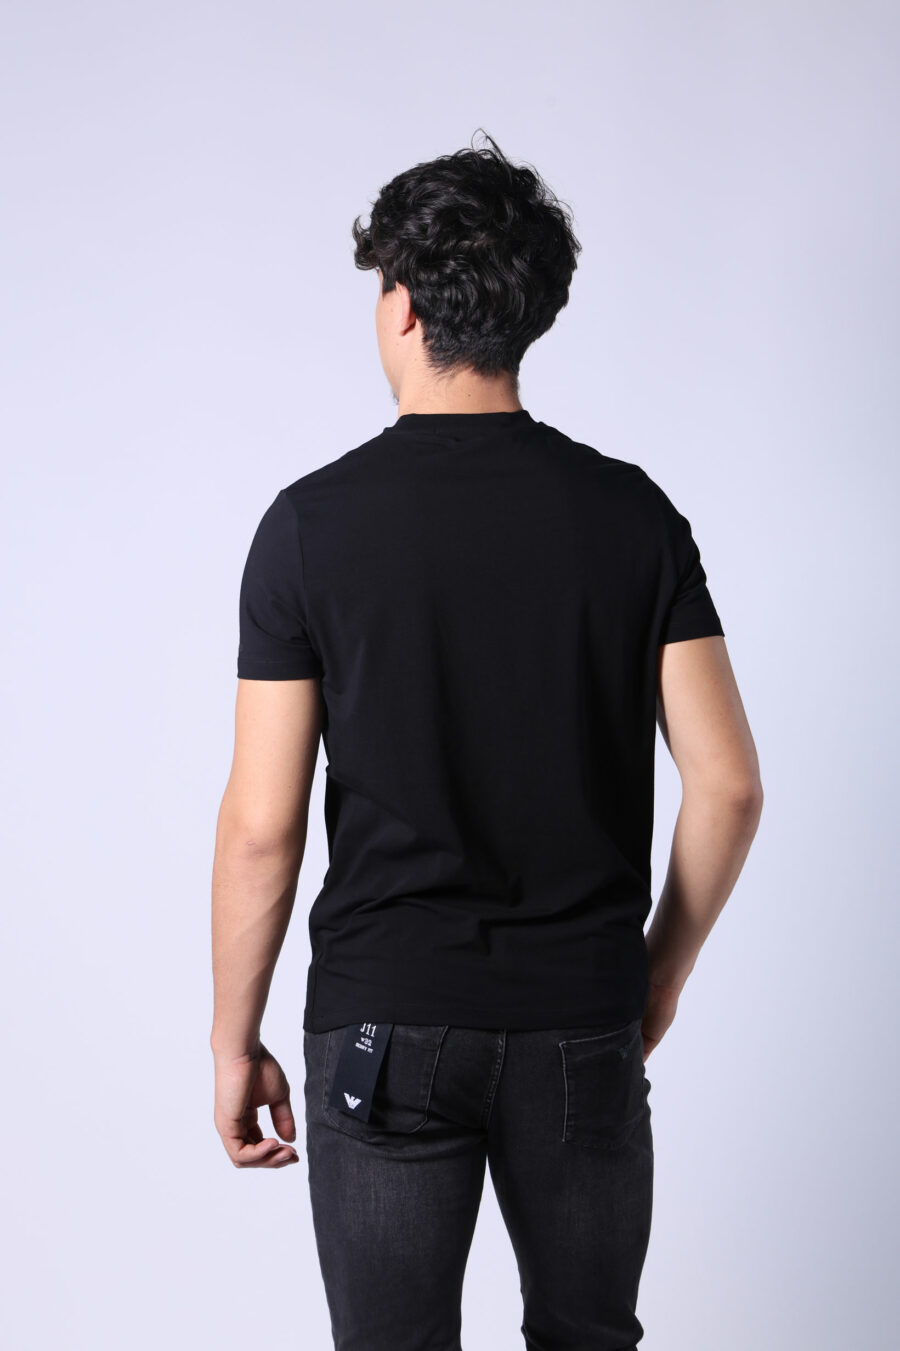 Black t-shirt with white "karl silhouette" maxi logo - Untitled Catalog 05778